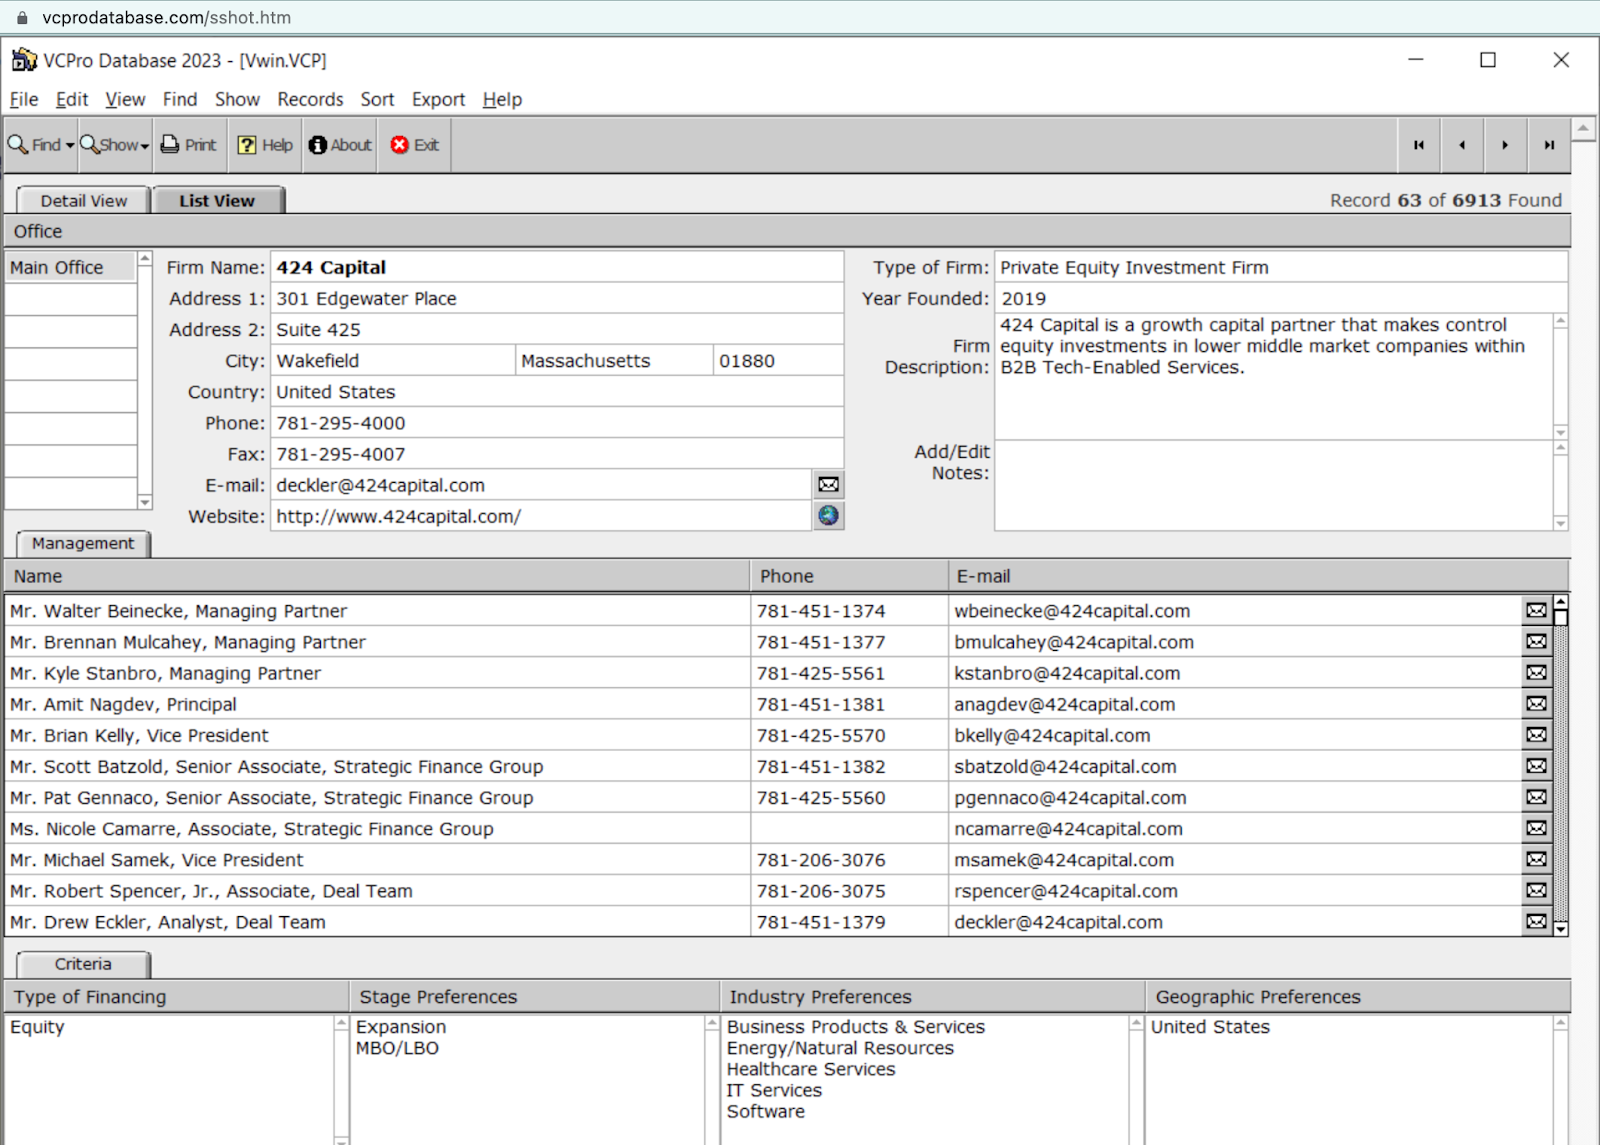 Image showing VCPro Database as a venture capital platform